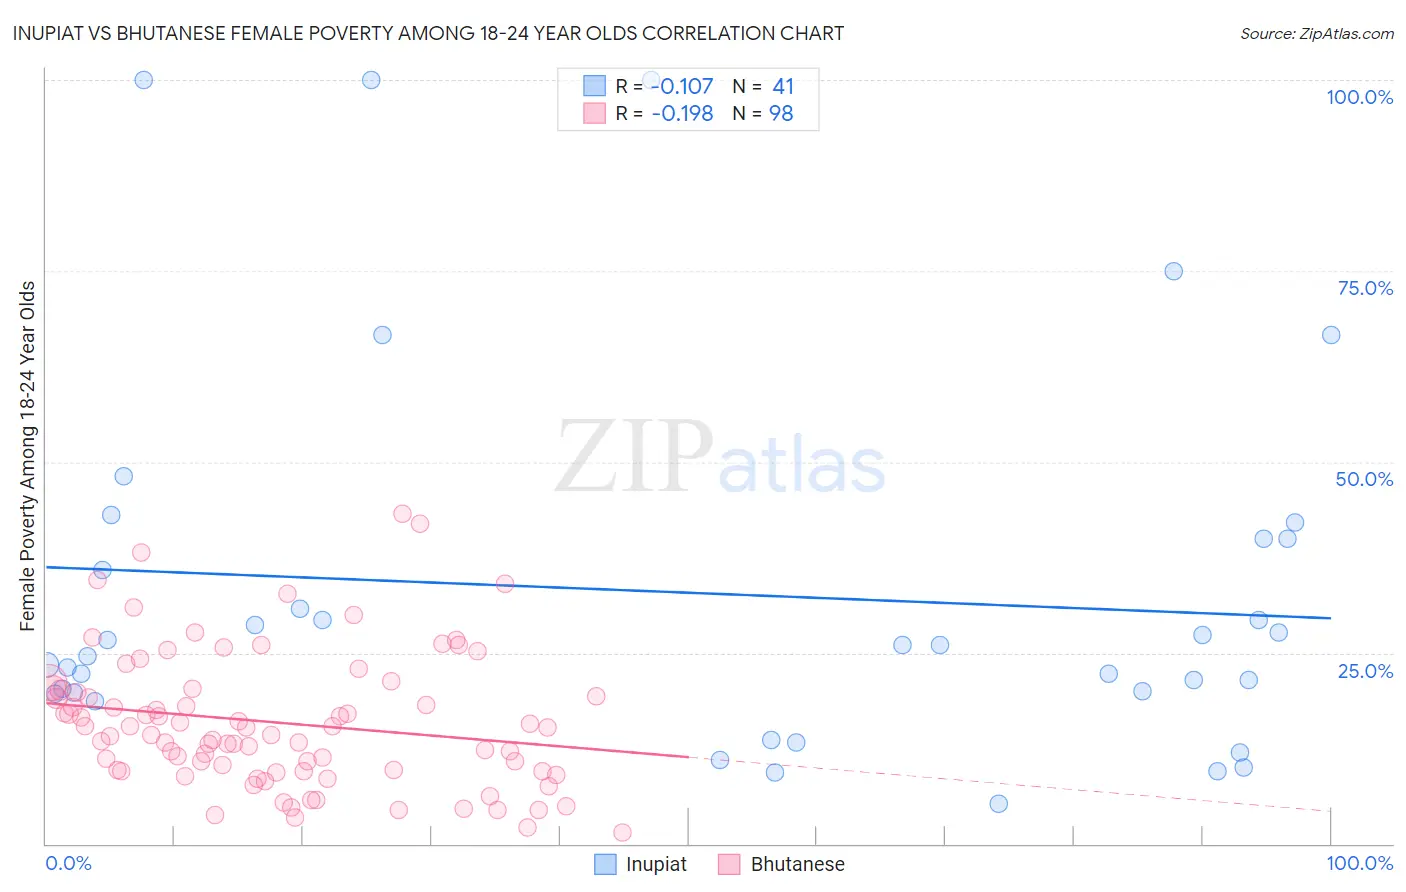 Inupiat vs Bhutanese Female Poverty Among 18-24 Year Olds